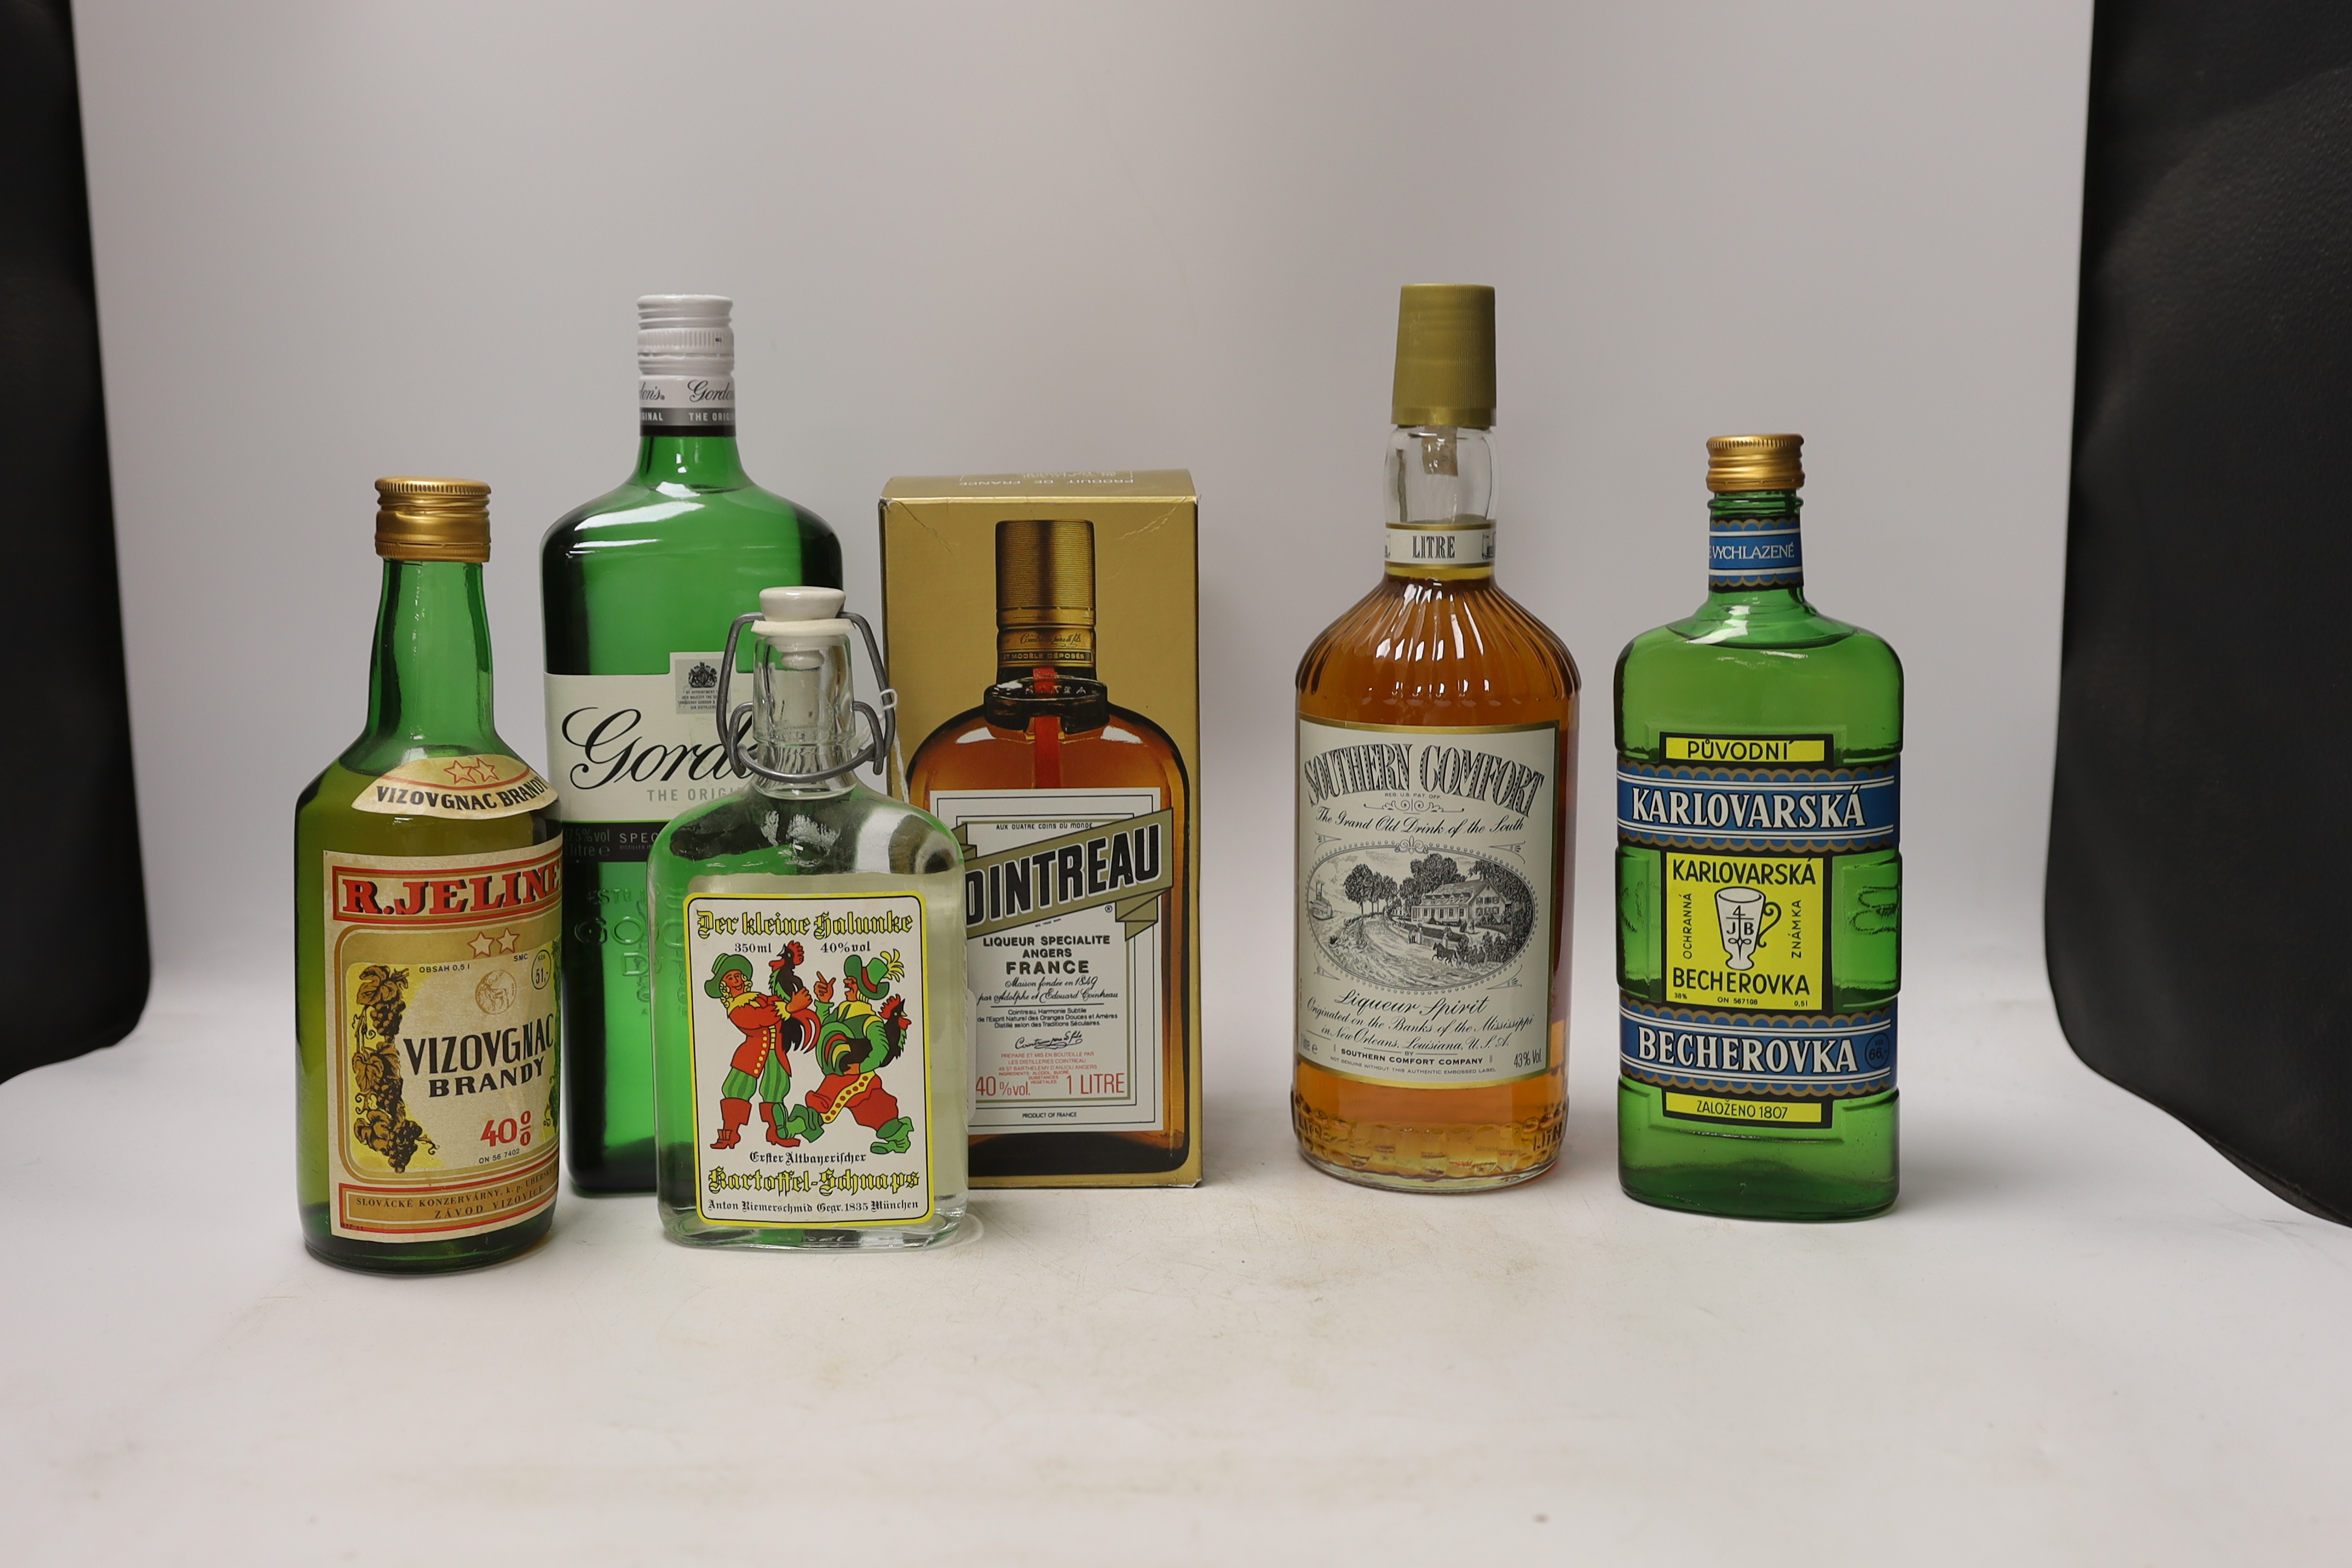 Ten various bottles of spirits and liqueurs, Gordon’s gin, Southern Comfort, Cointreau etc